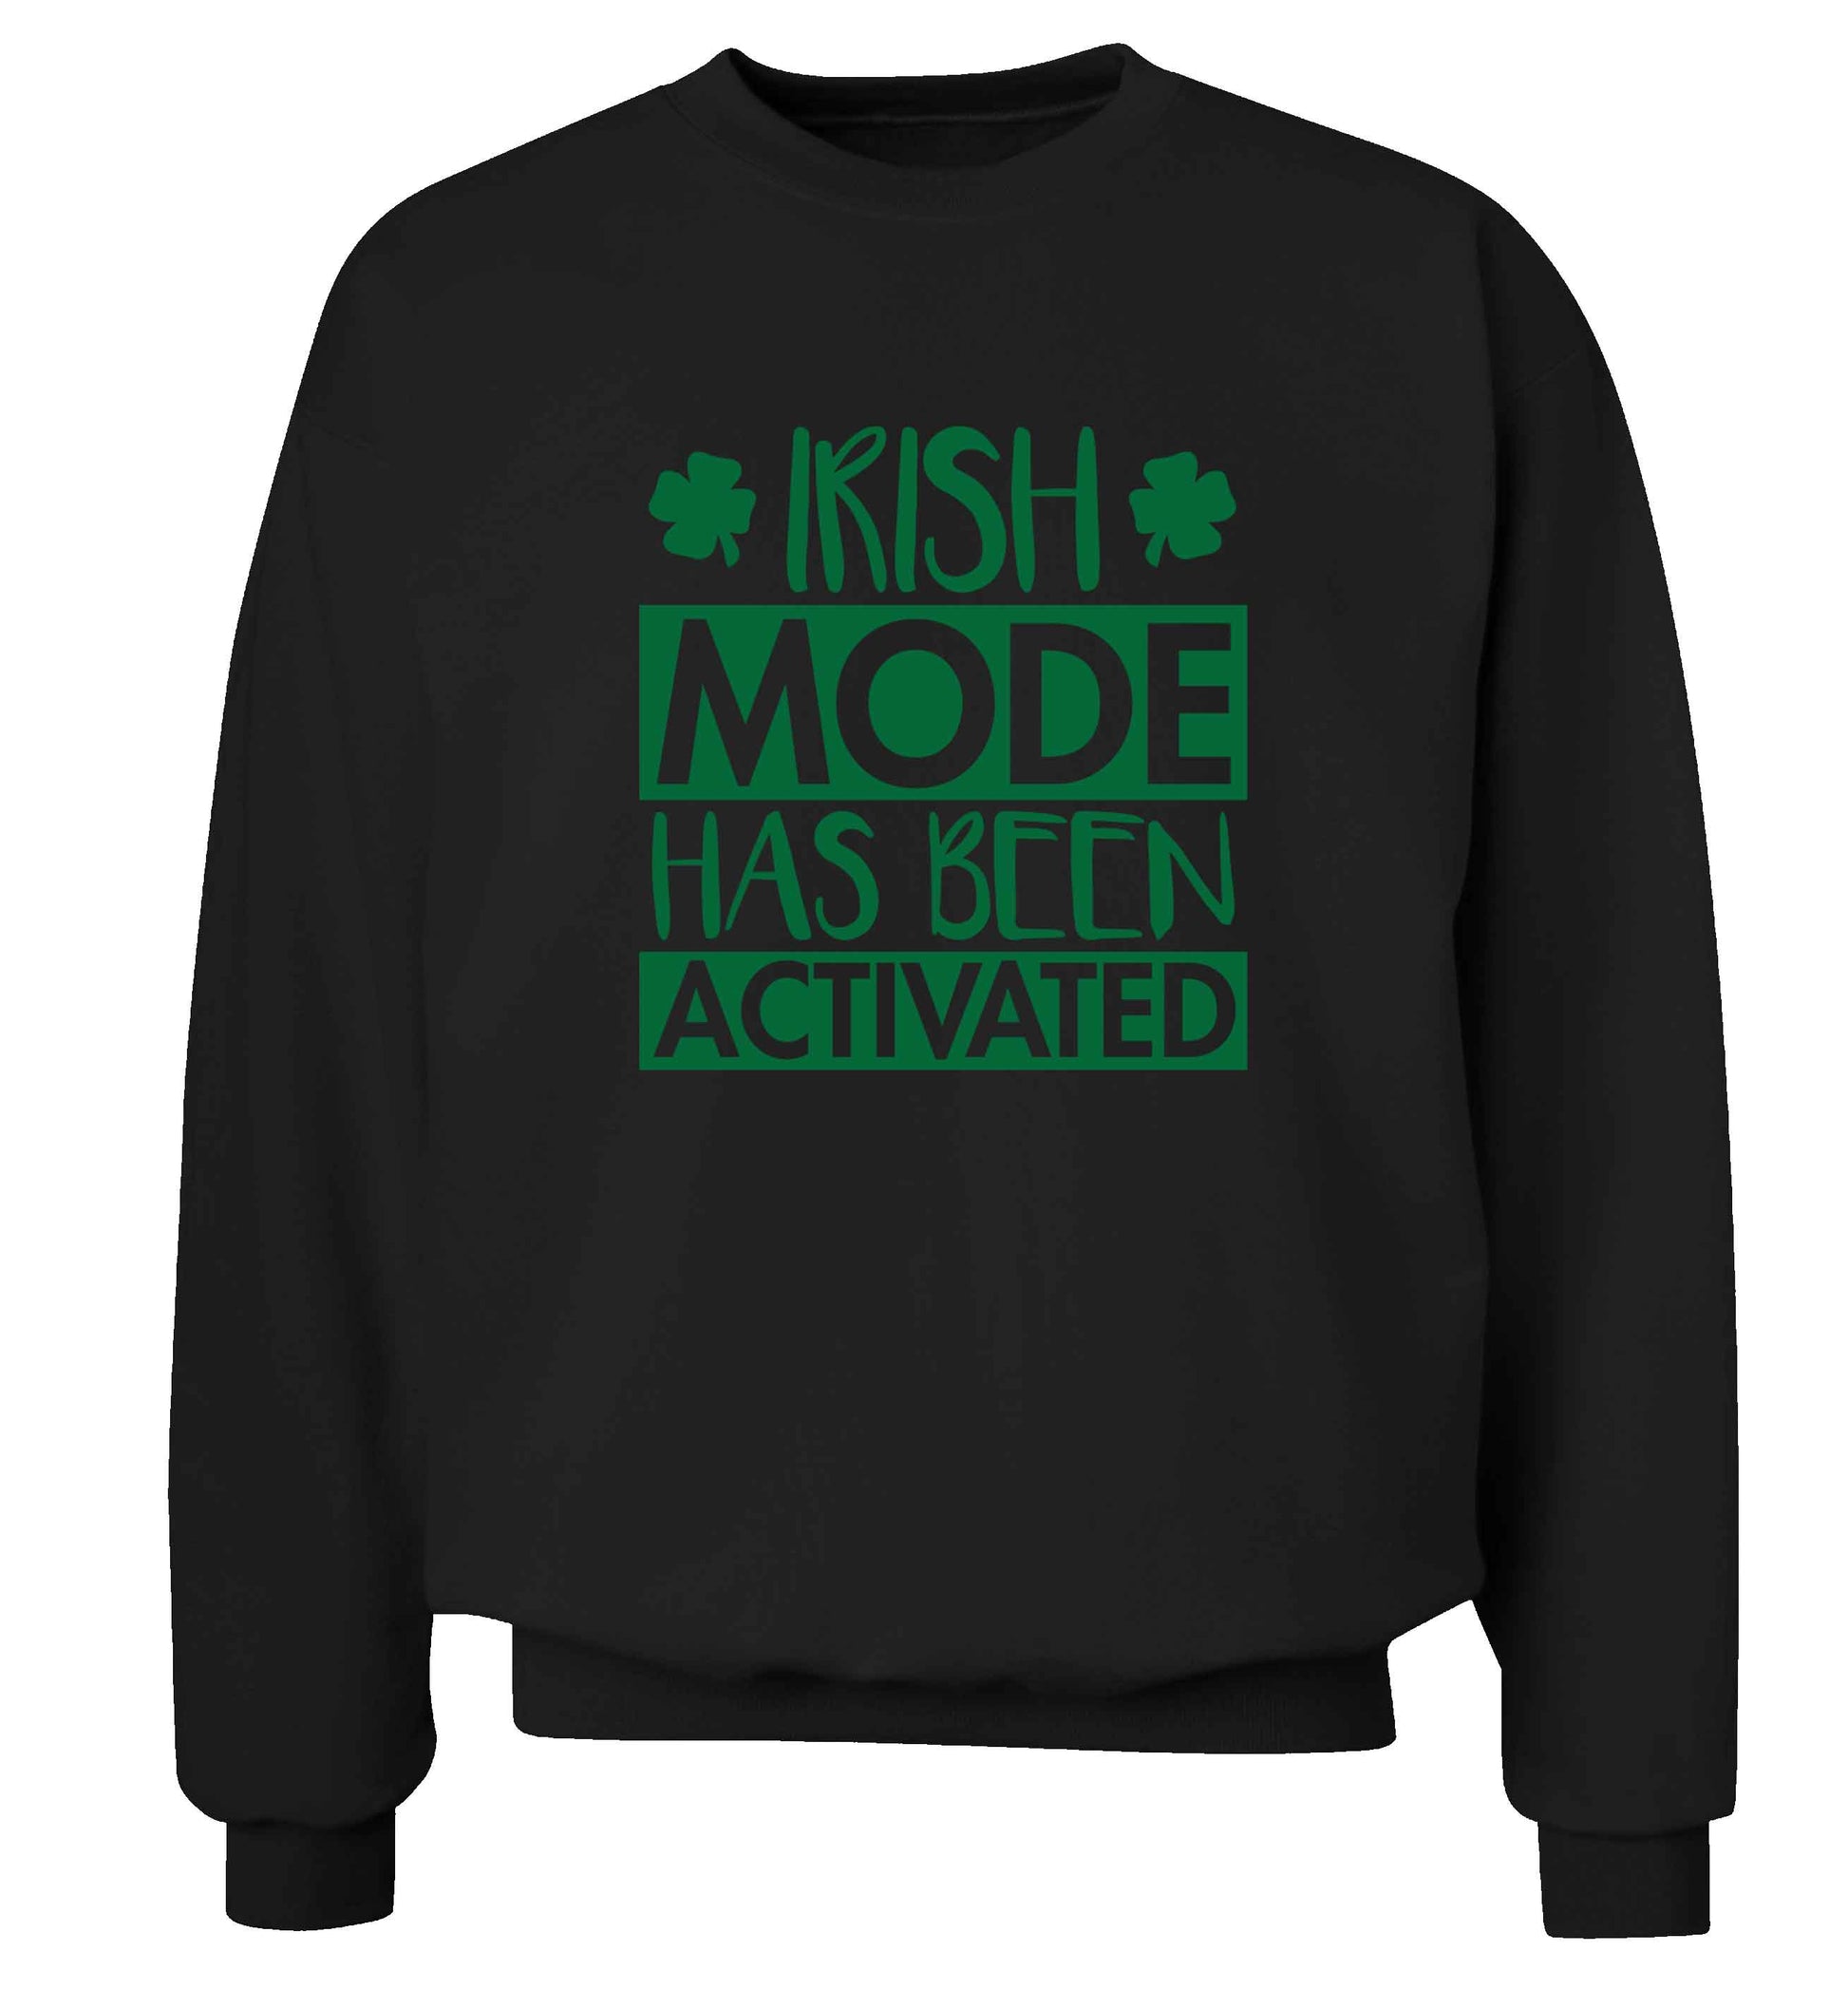 Irish mode has been activated adult's unisex black sweater 2XL